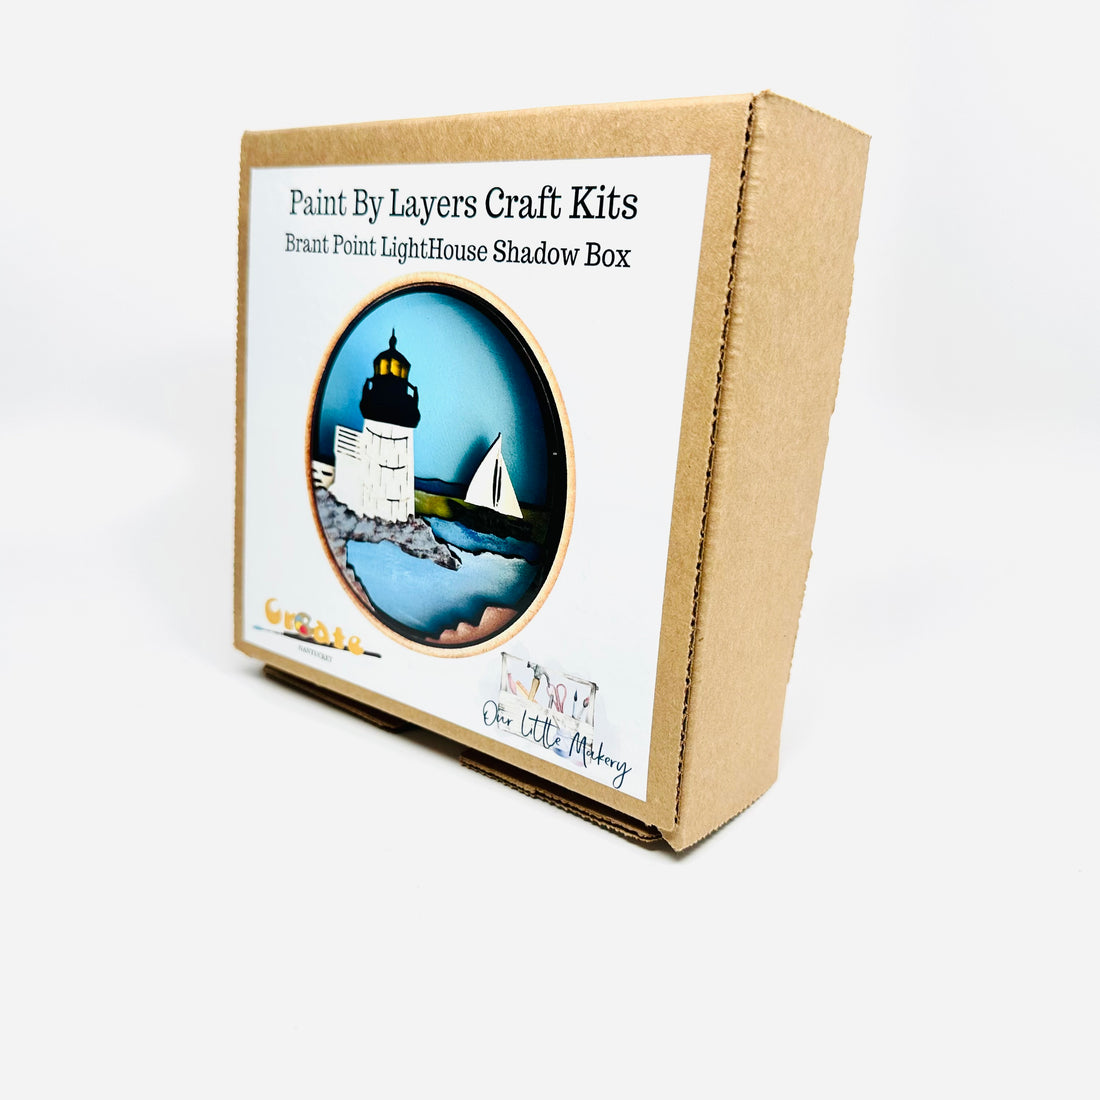 Brant Point Lighthouse Shadow Box Craft Kit